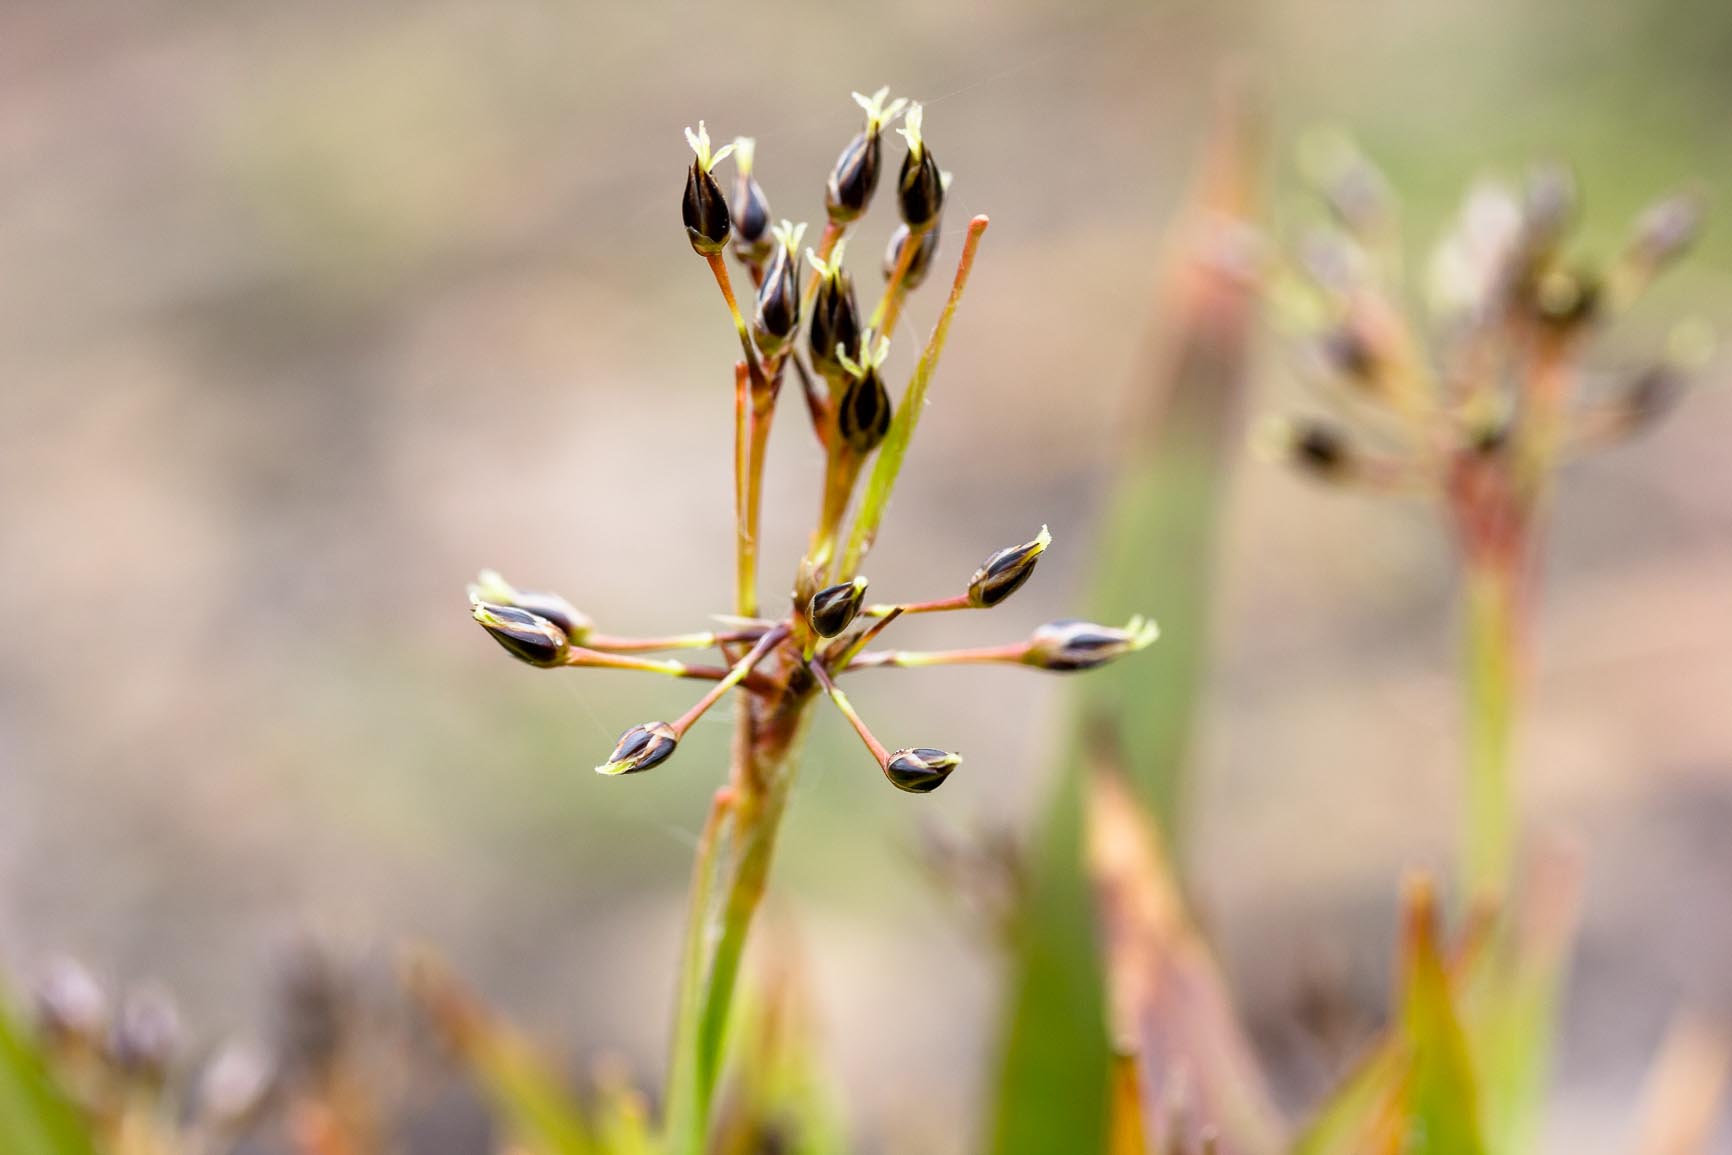 Ruige veldbies - Luzula pilosa : Plant in P9 pot